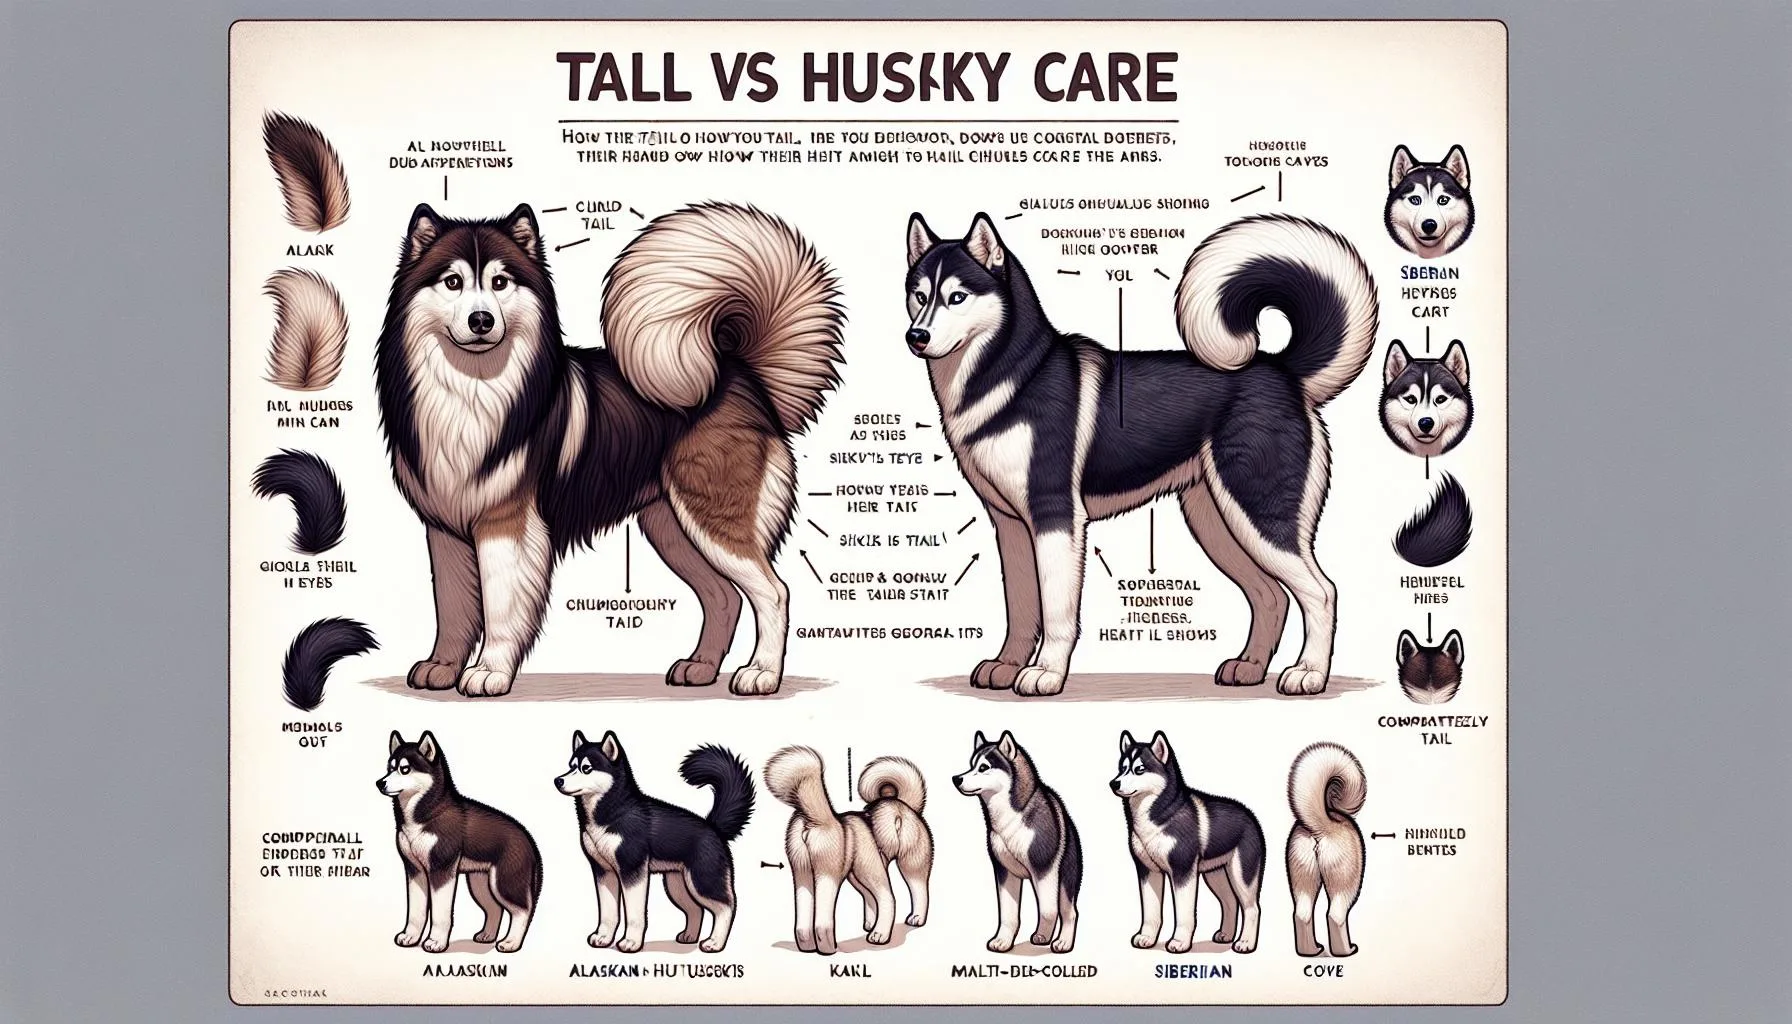 Enhance your huskys tail health with Alaskan vs Siberian tails!